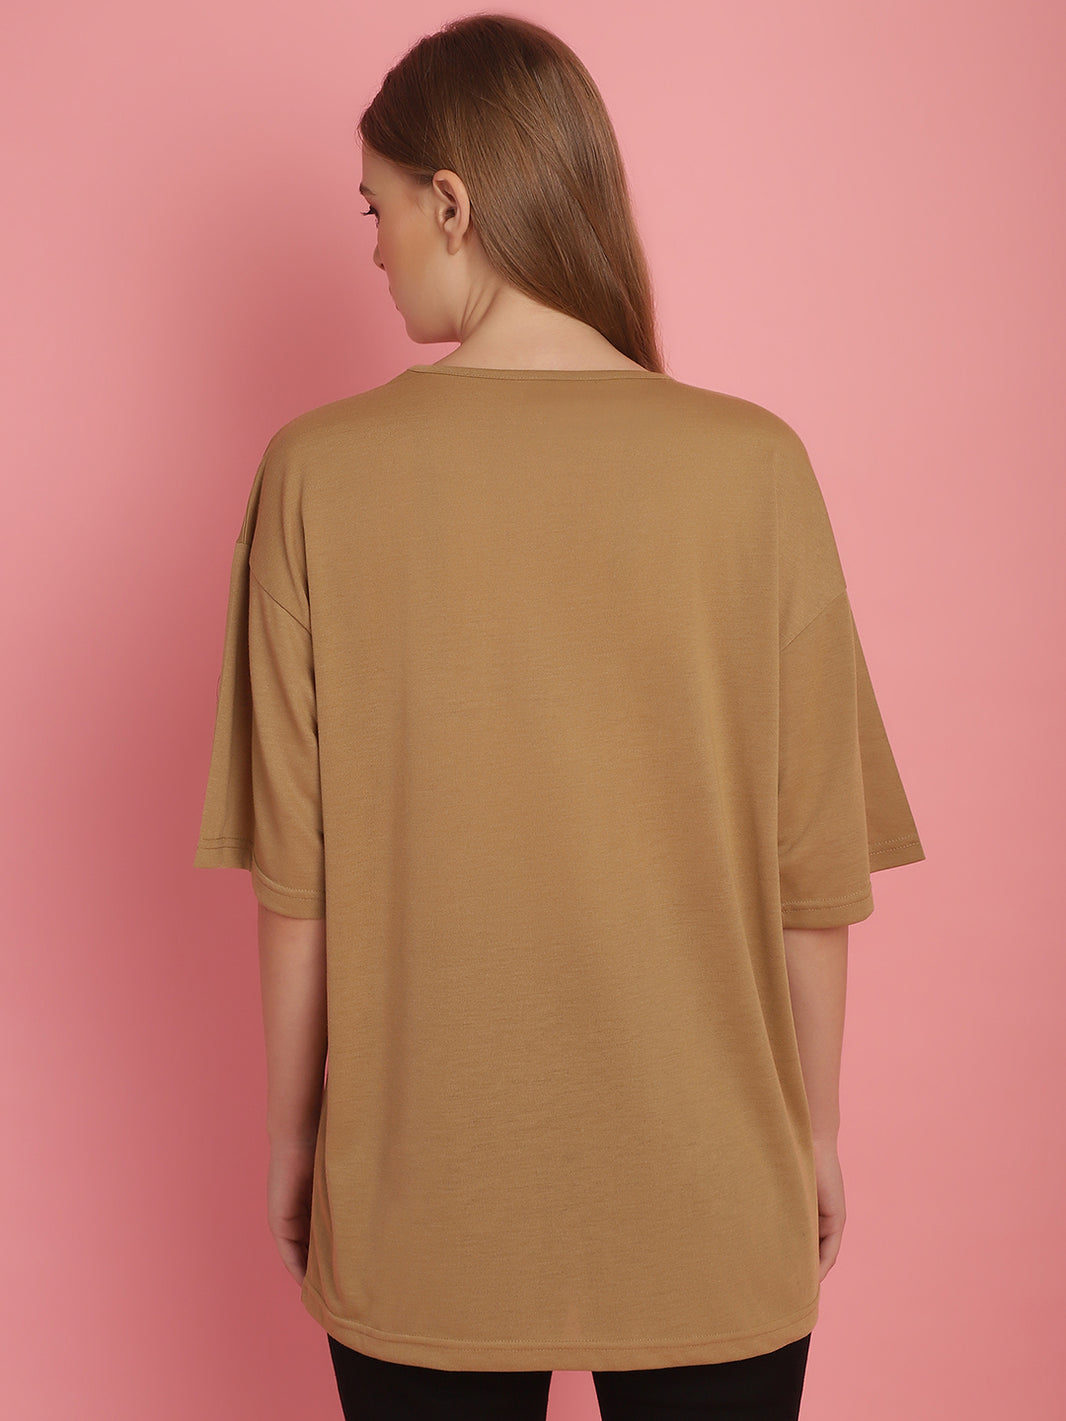 Vimal Jonney Printed Beige Round Neck Cotton Oversize Half sleeves Tshirt For Women